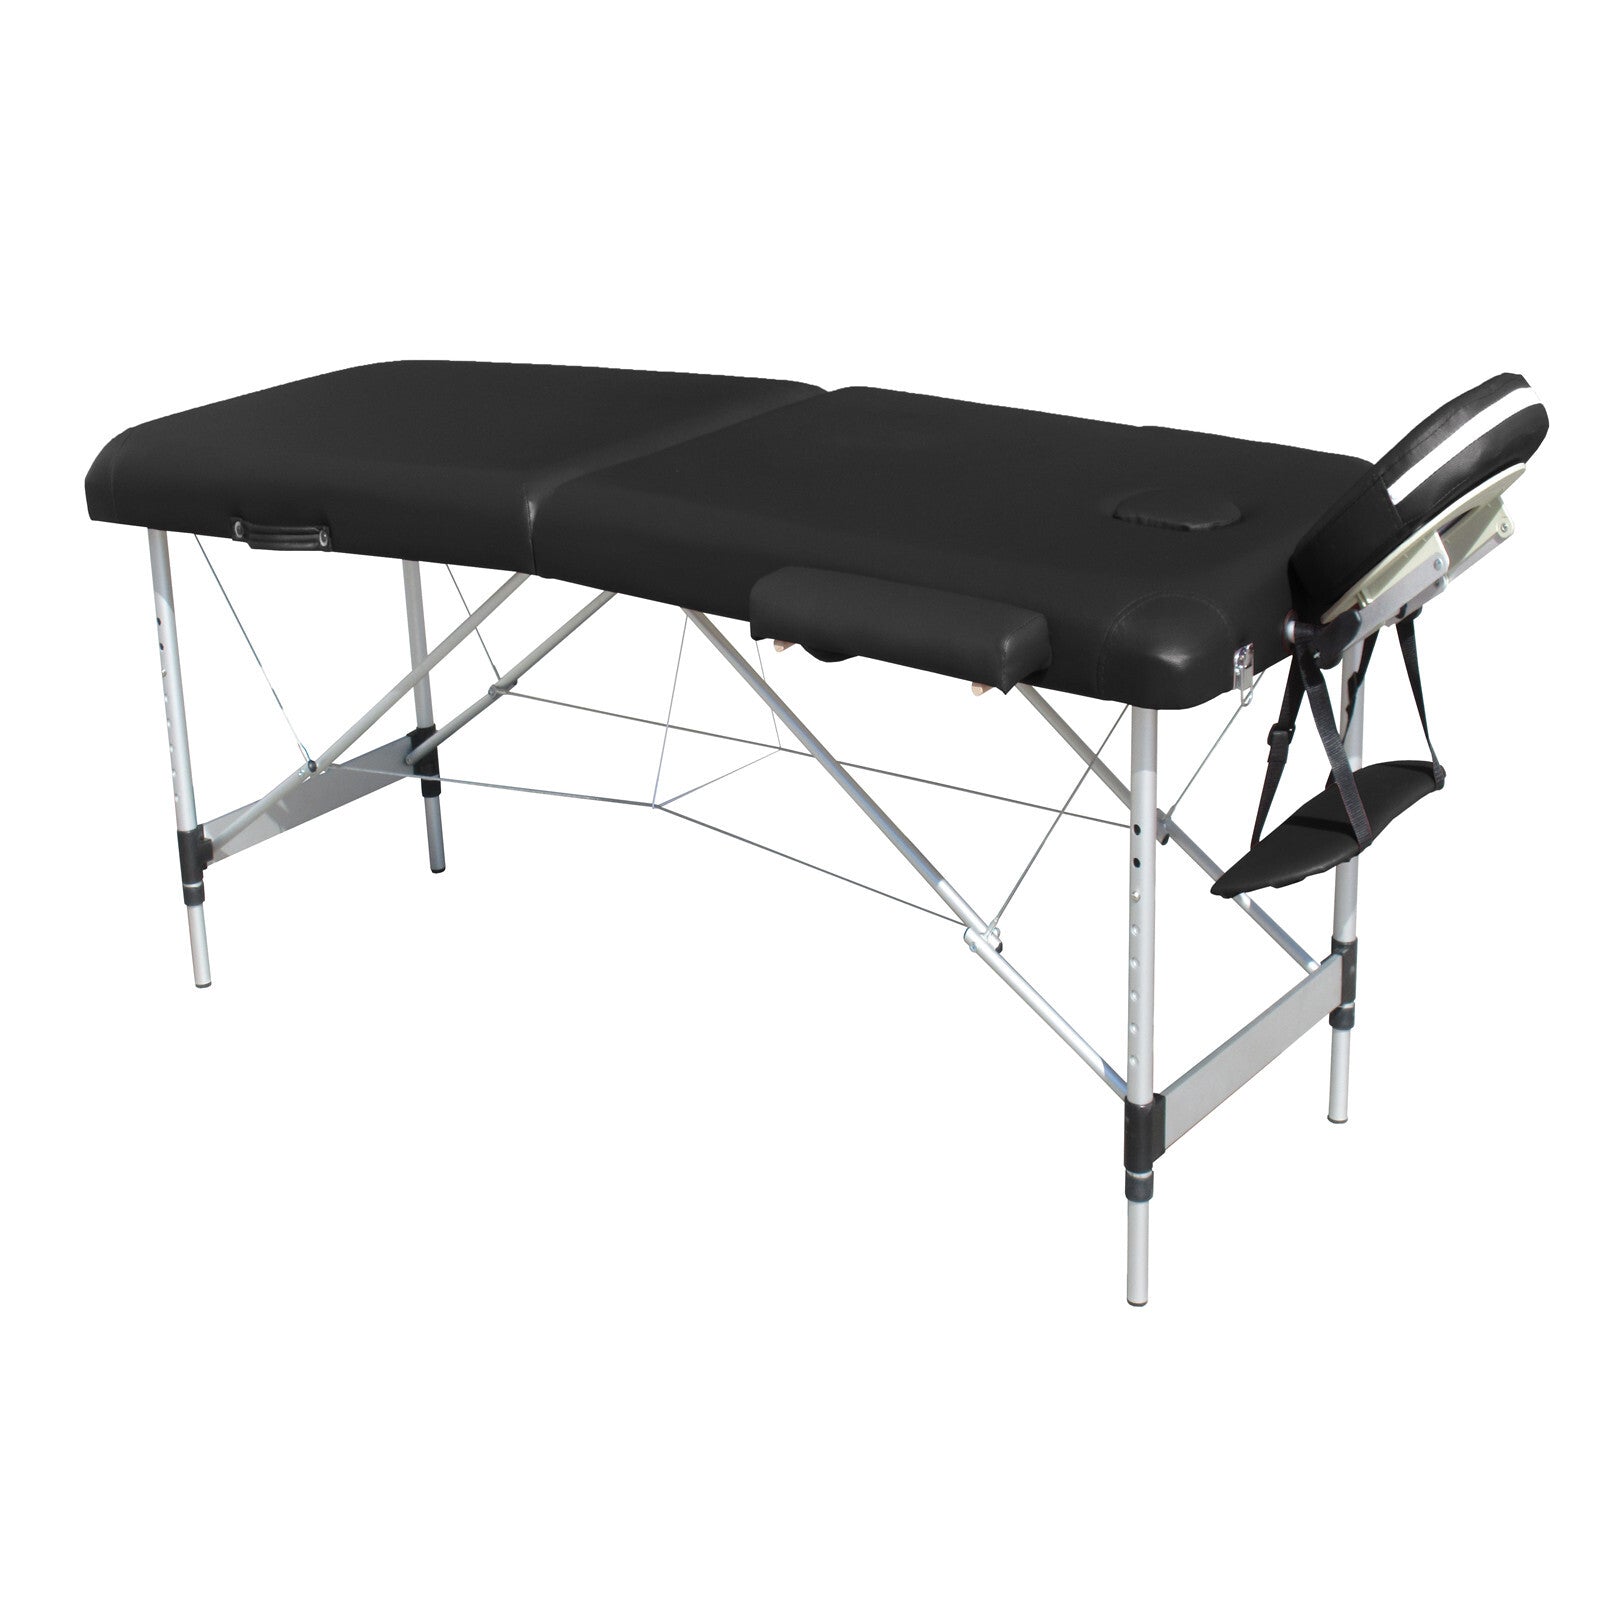 2 Fold Portable Aluminium Massage Table Massage Bed Beauty Therapy Black - SILBERSHELL